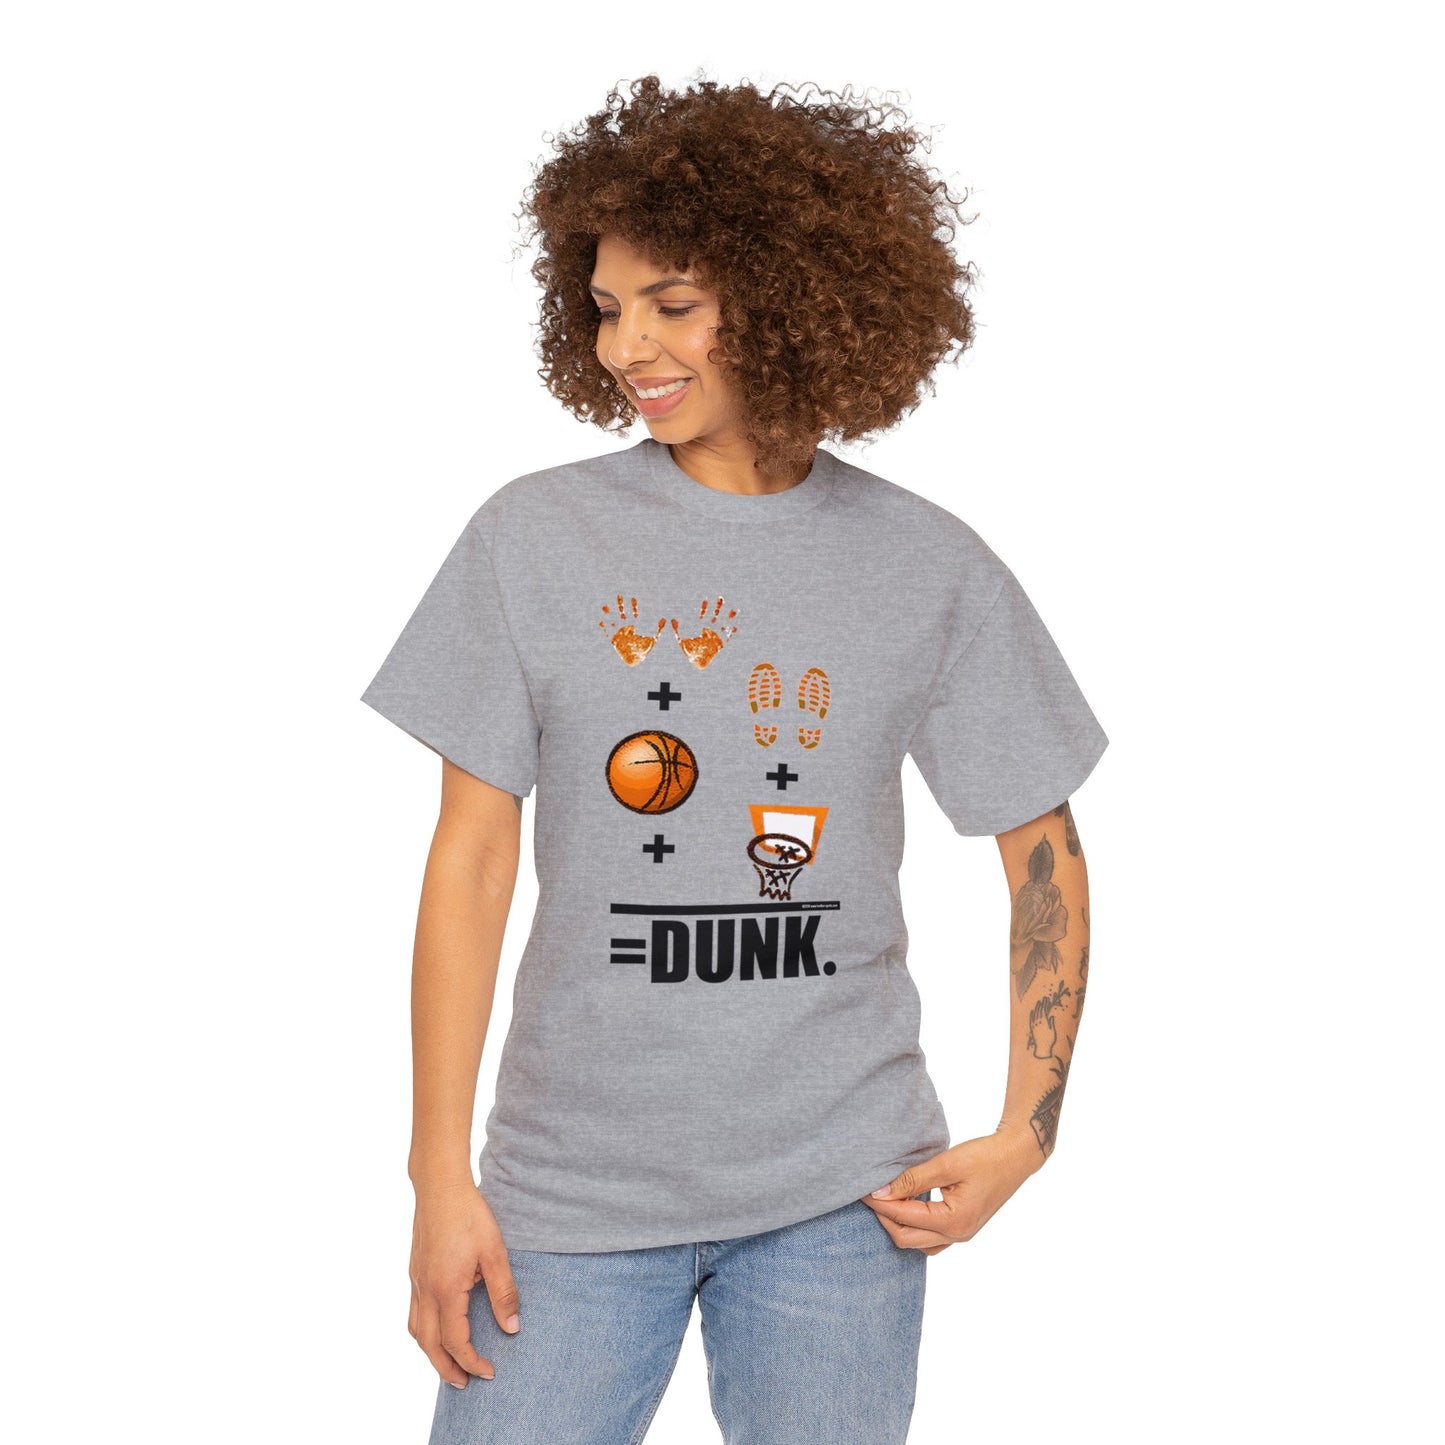 Basketball Equation, Basketball Math, Hands Plus Feet Plus Ball Plus Net Equals Dunk. Funny Basketball T-Shirt, Basketball Gift, Humorous